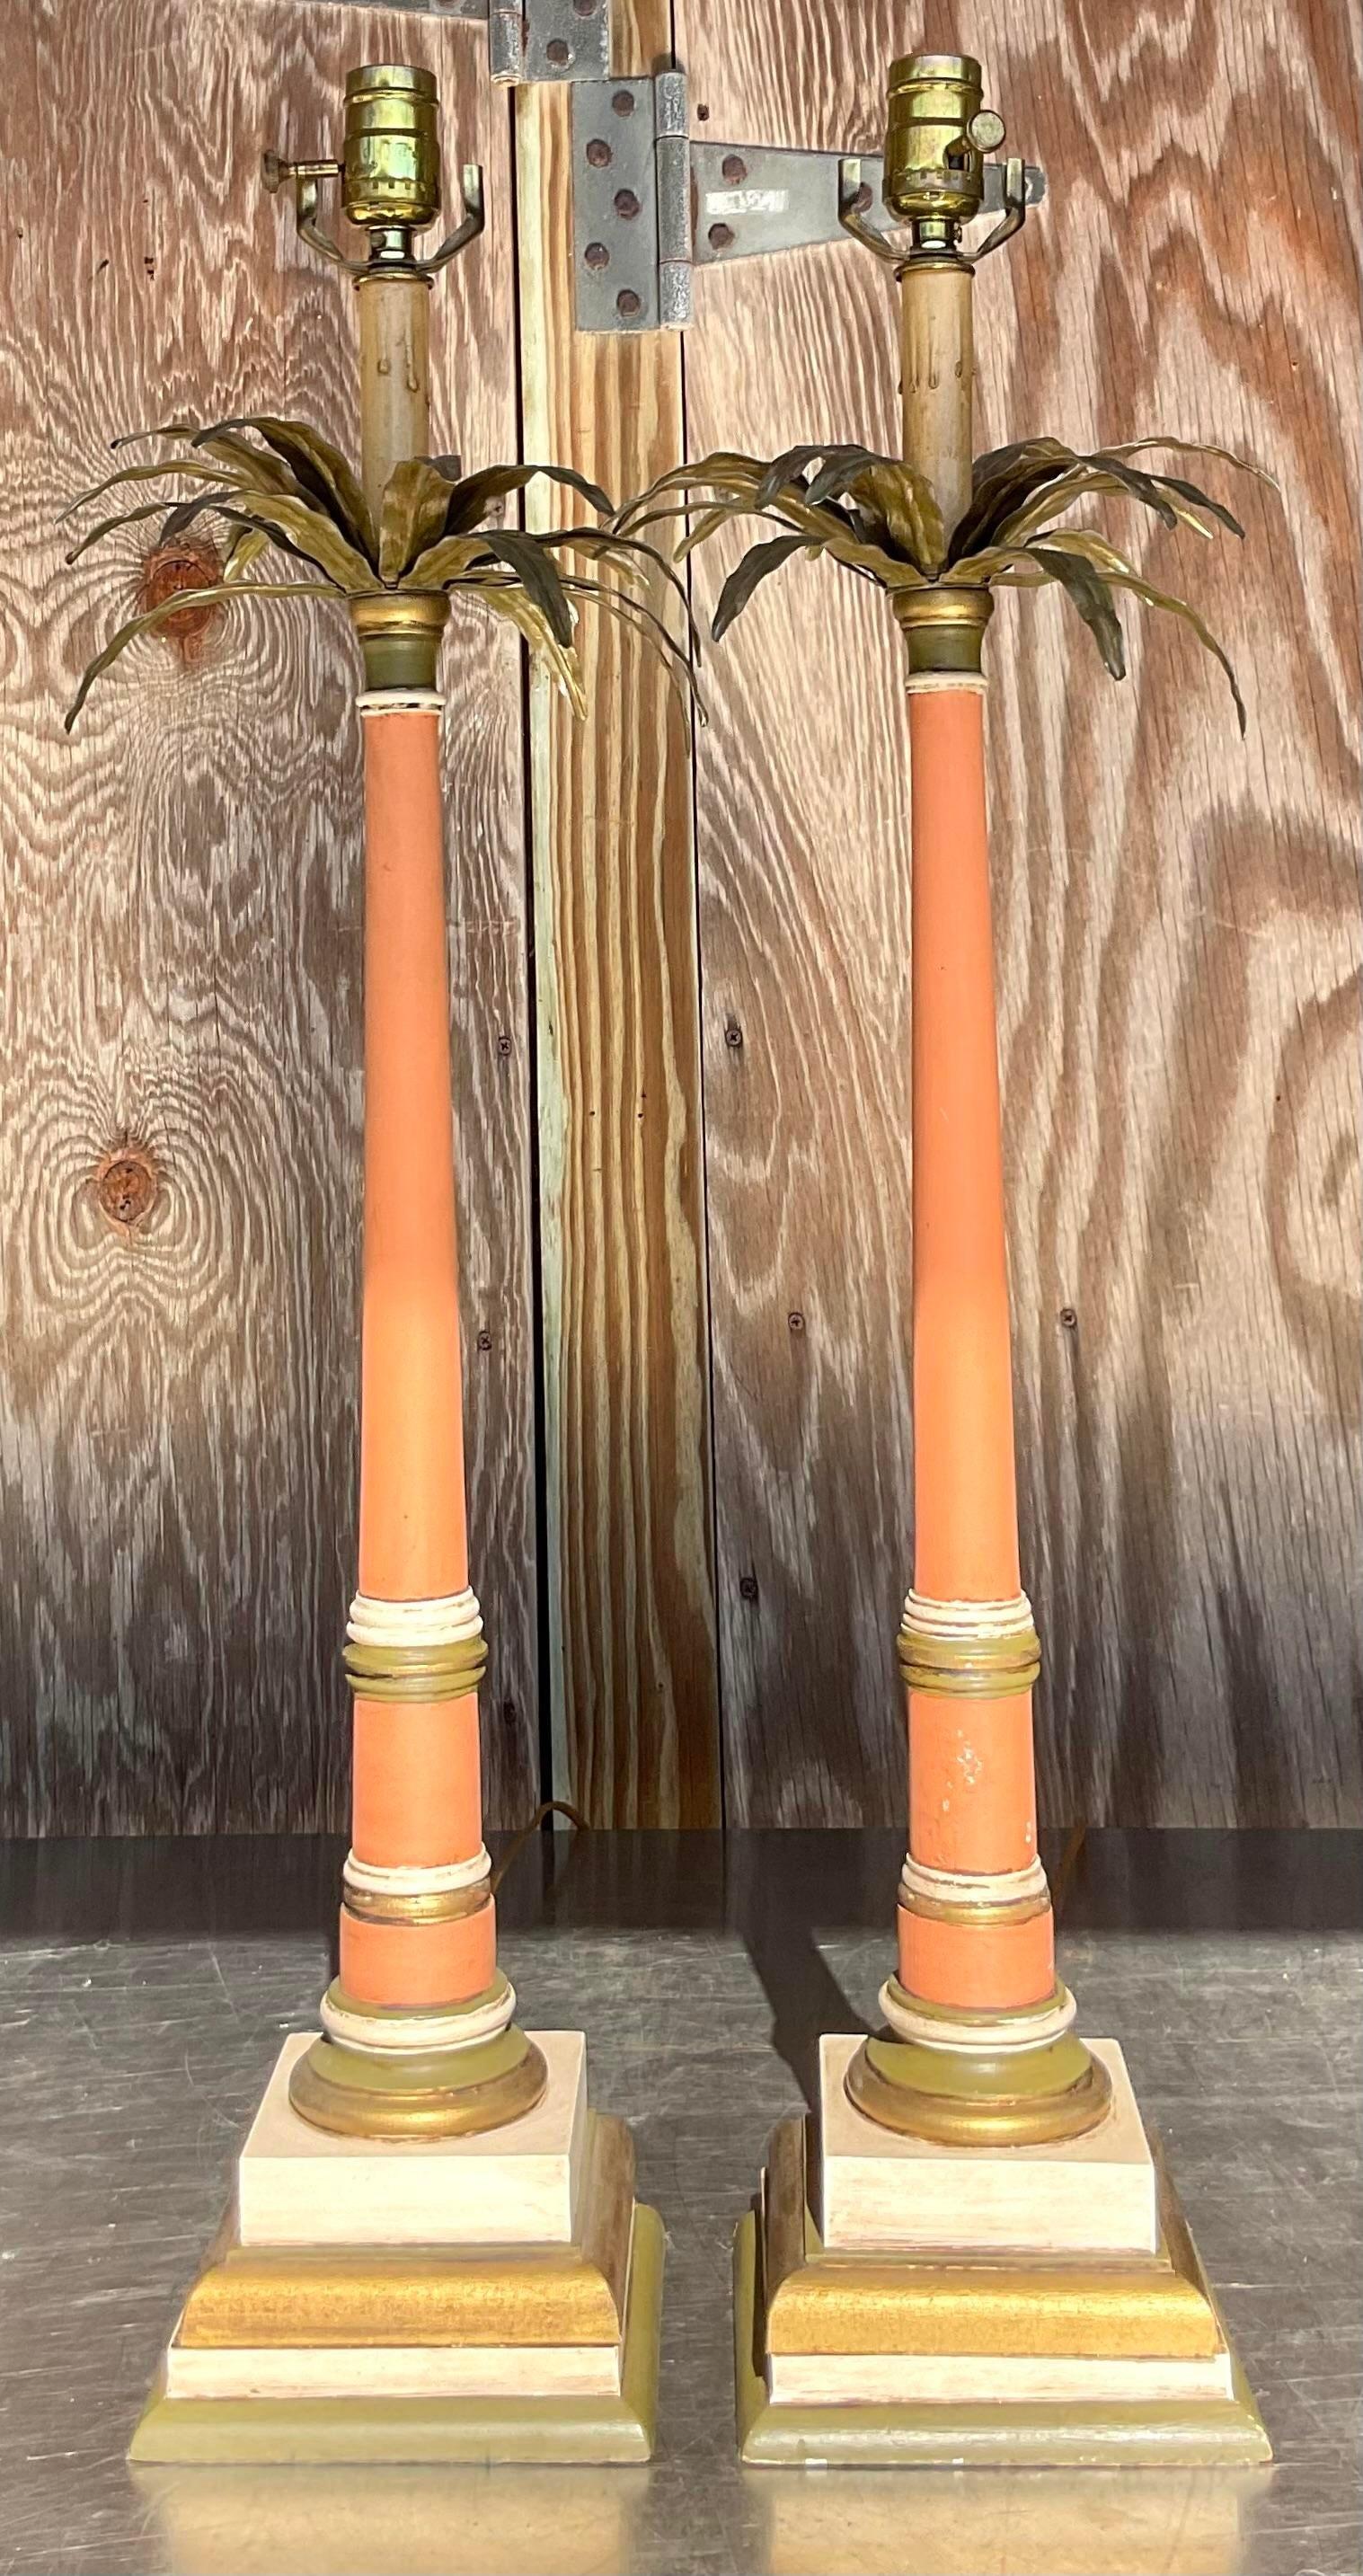 Metal Vintage Regency Palm Tree Candlestick Lamps - a Pair